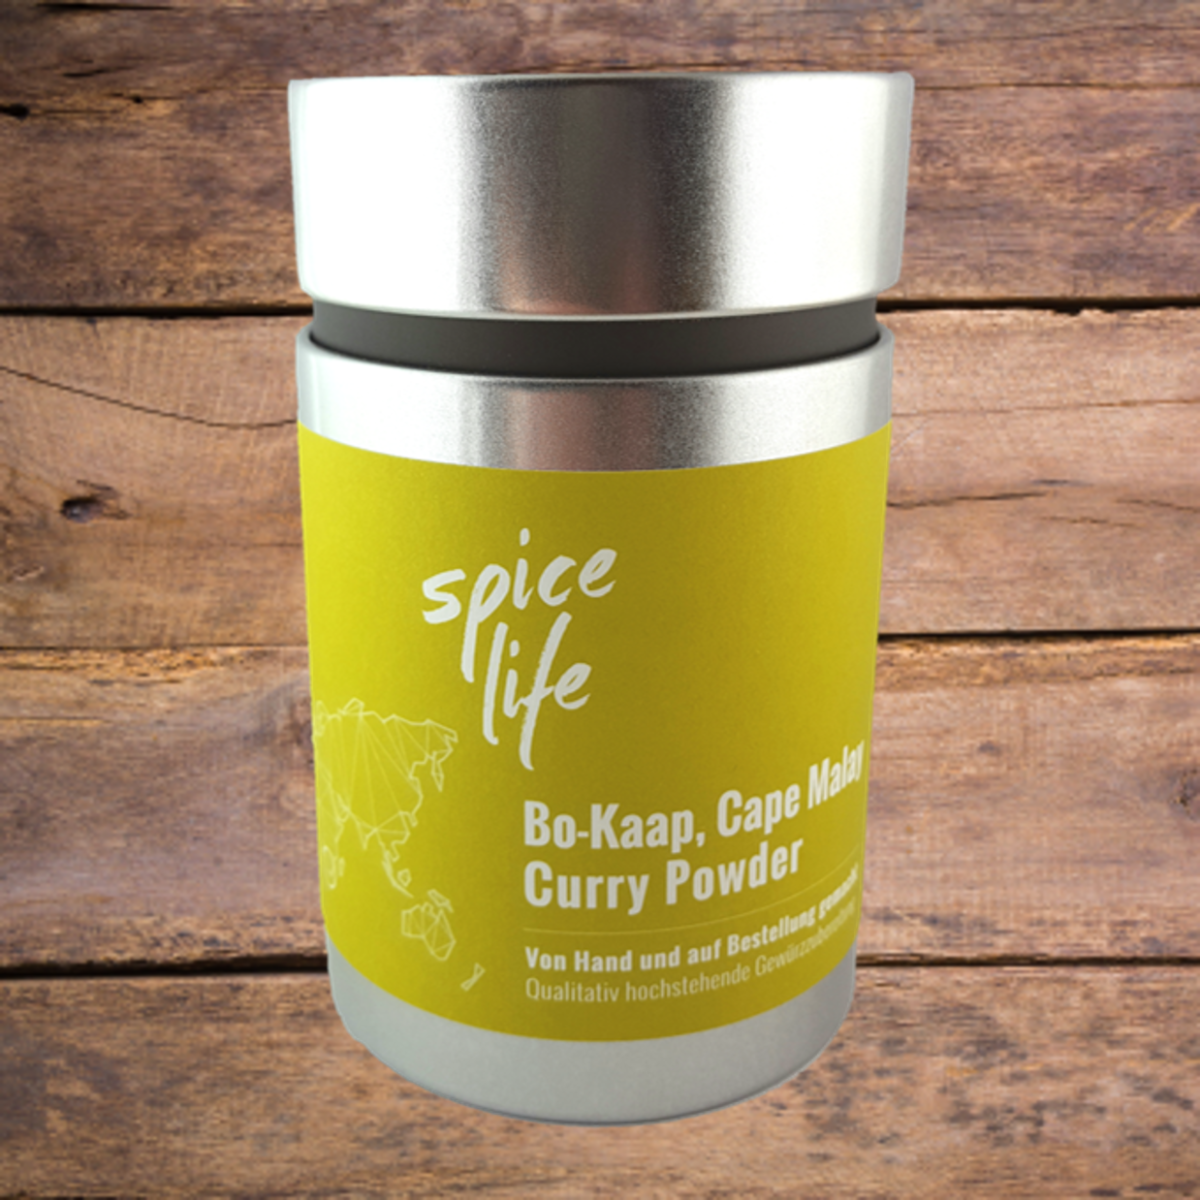 Bo-Kaap, Cape Malay Curry Powder